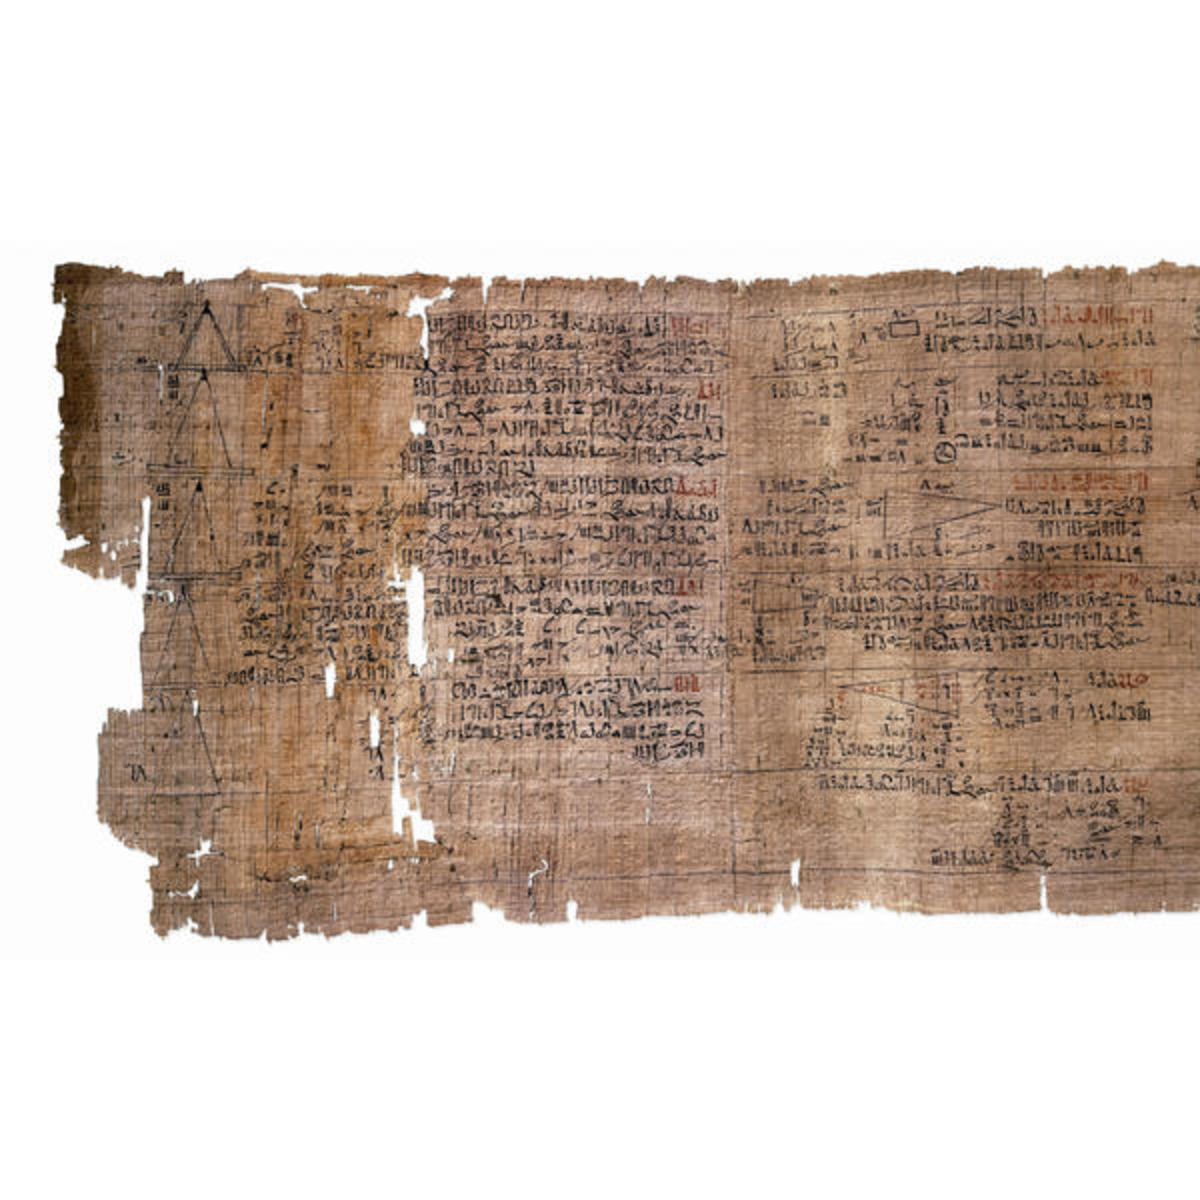 Rhind Mathematical Papyrus